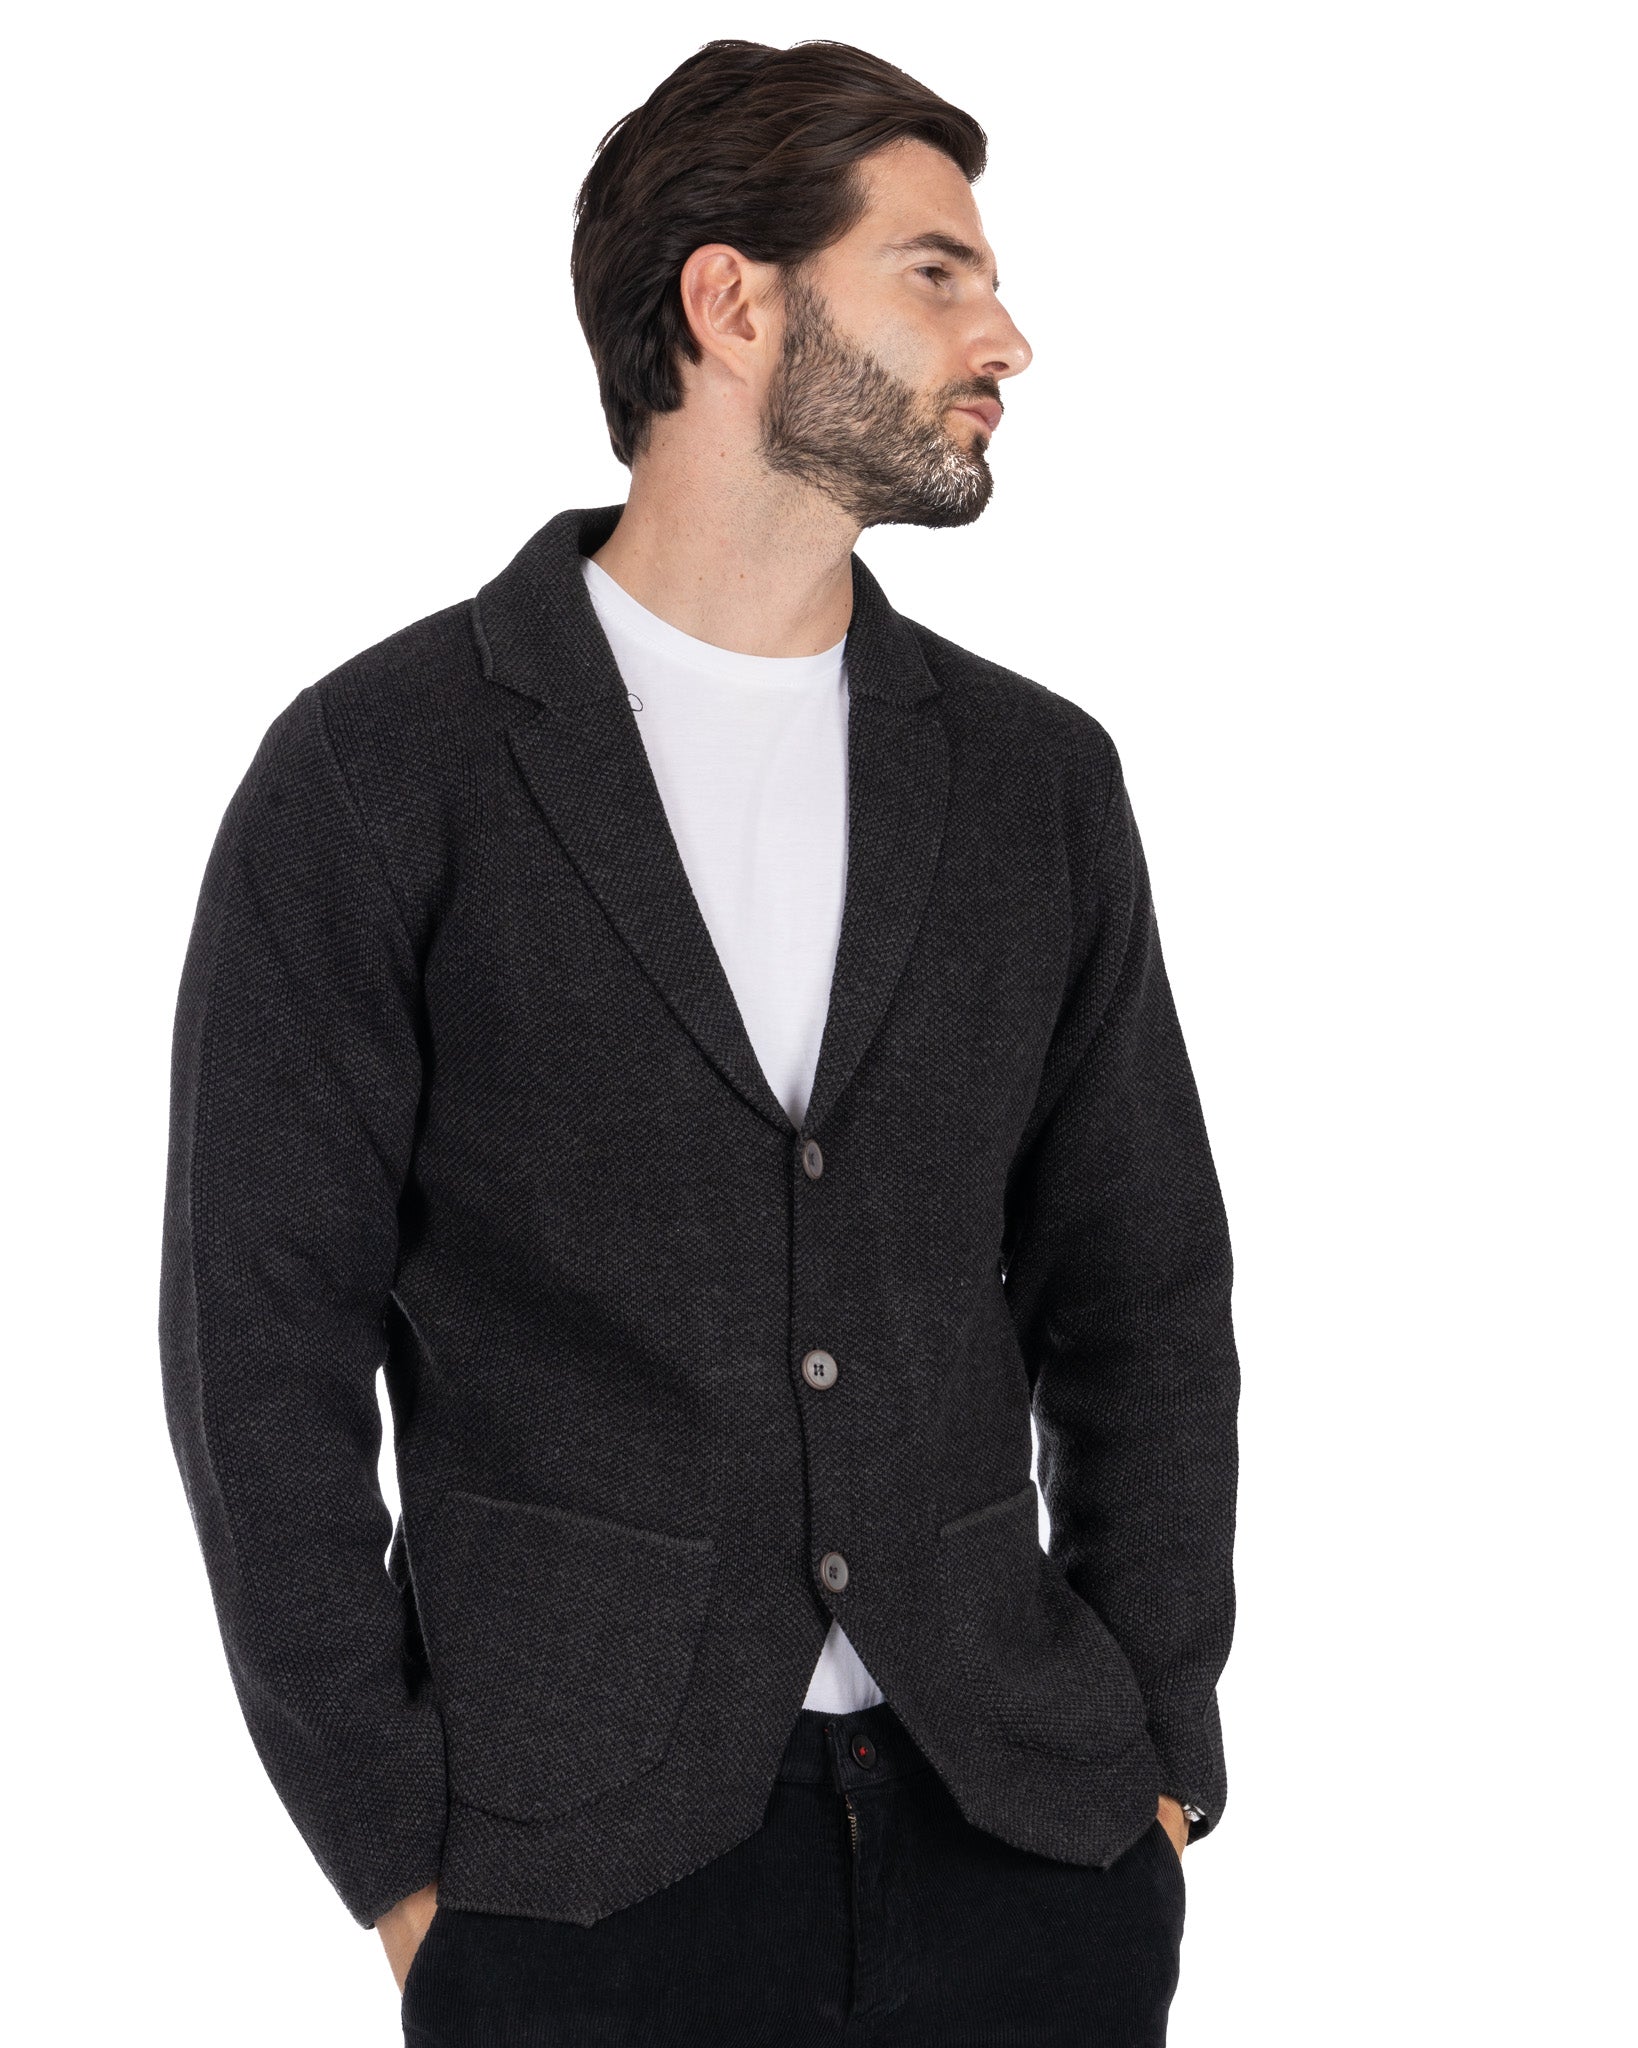 Laurent - gray knit cardigan